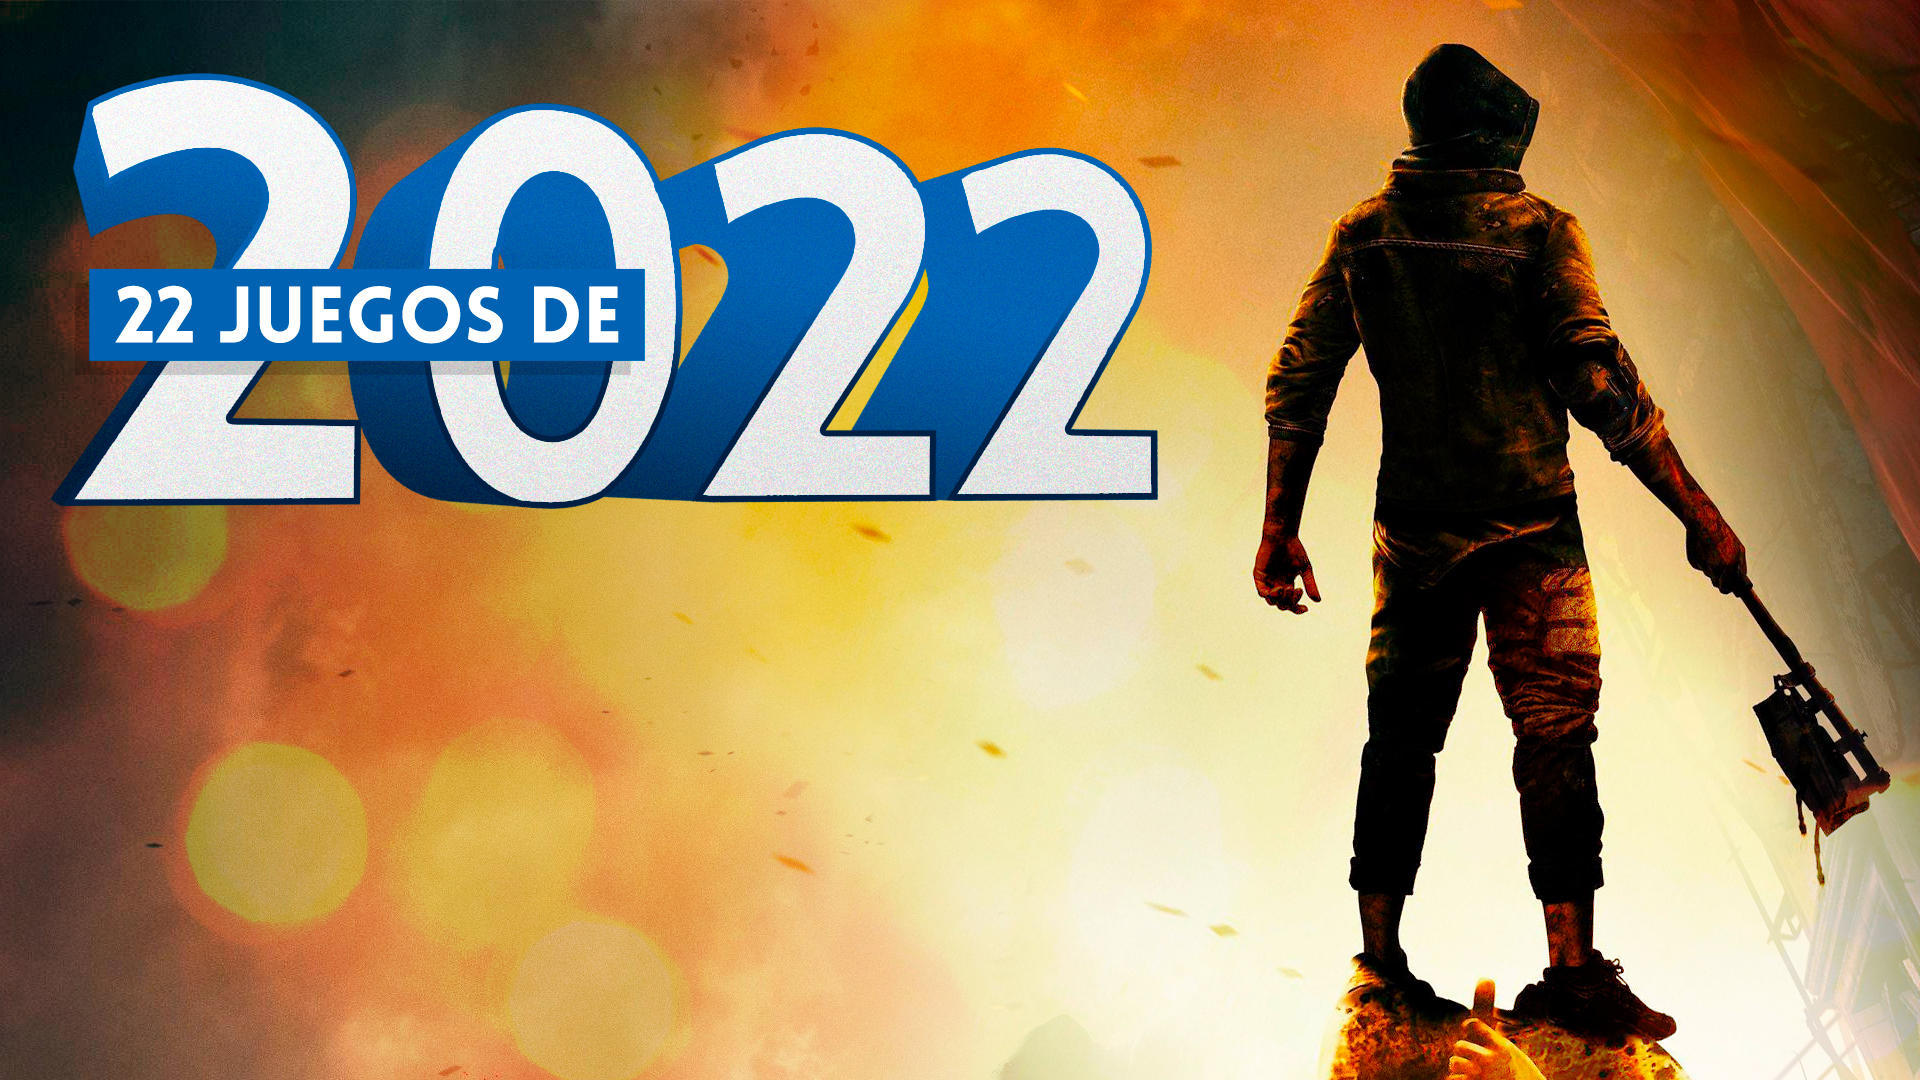 22 juegos de 2022: Dying Light 2